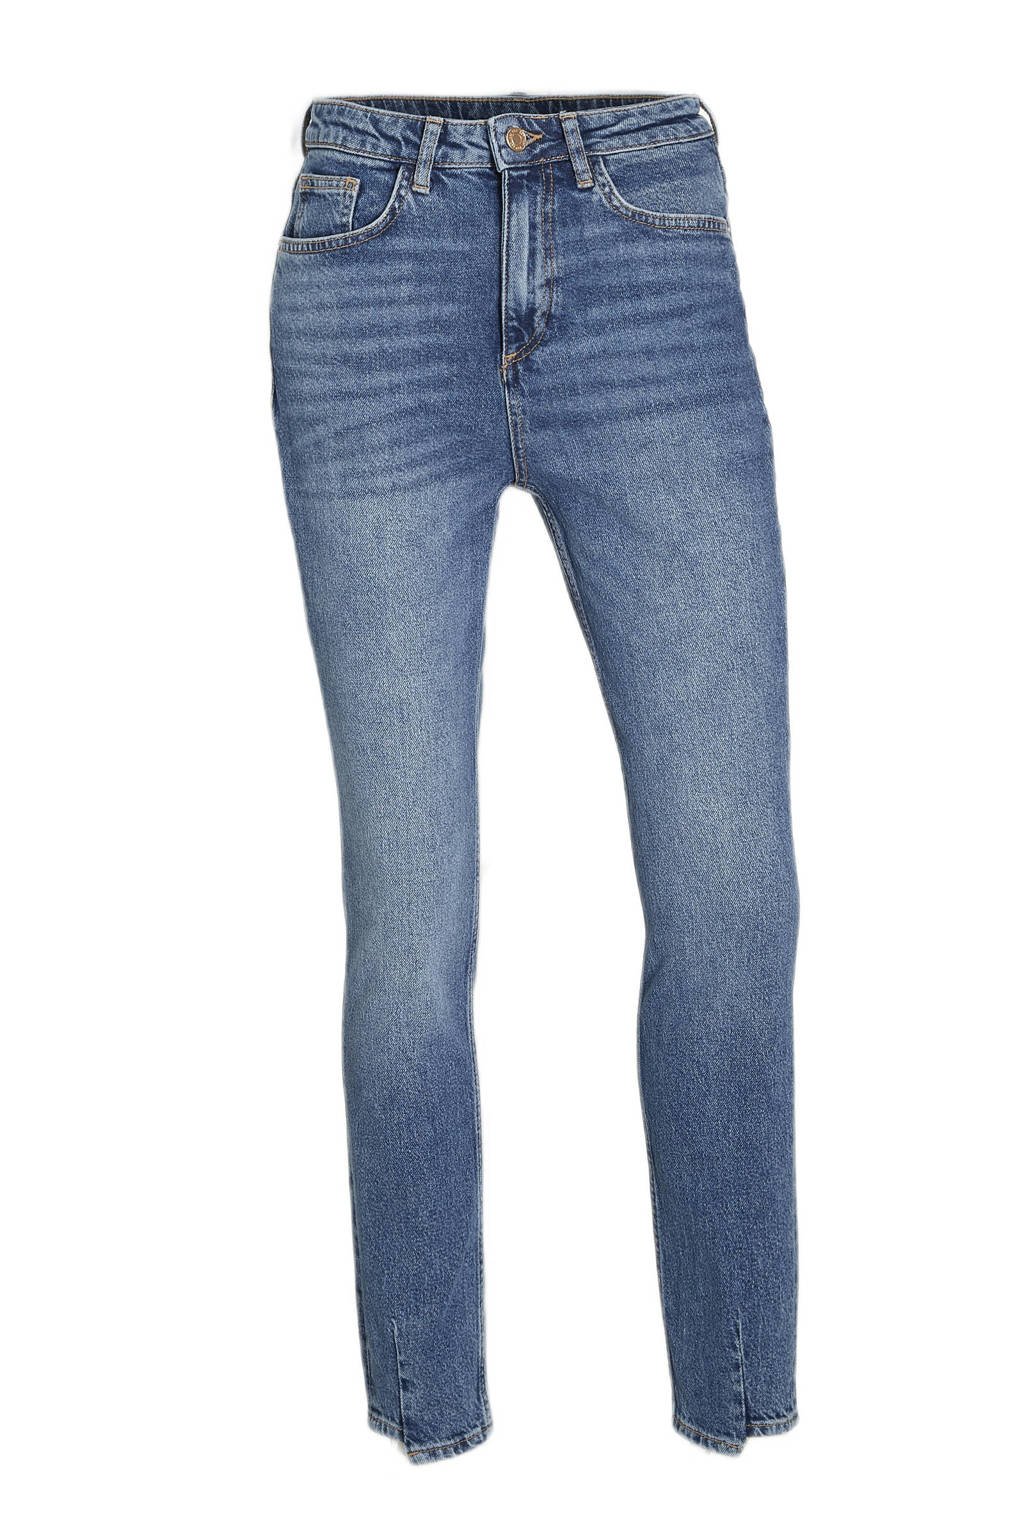 C&A high waist slim fit jeans blauw